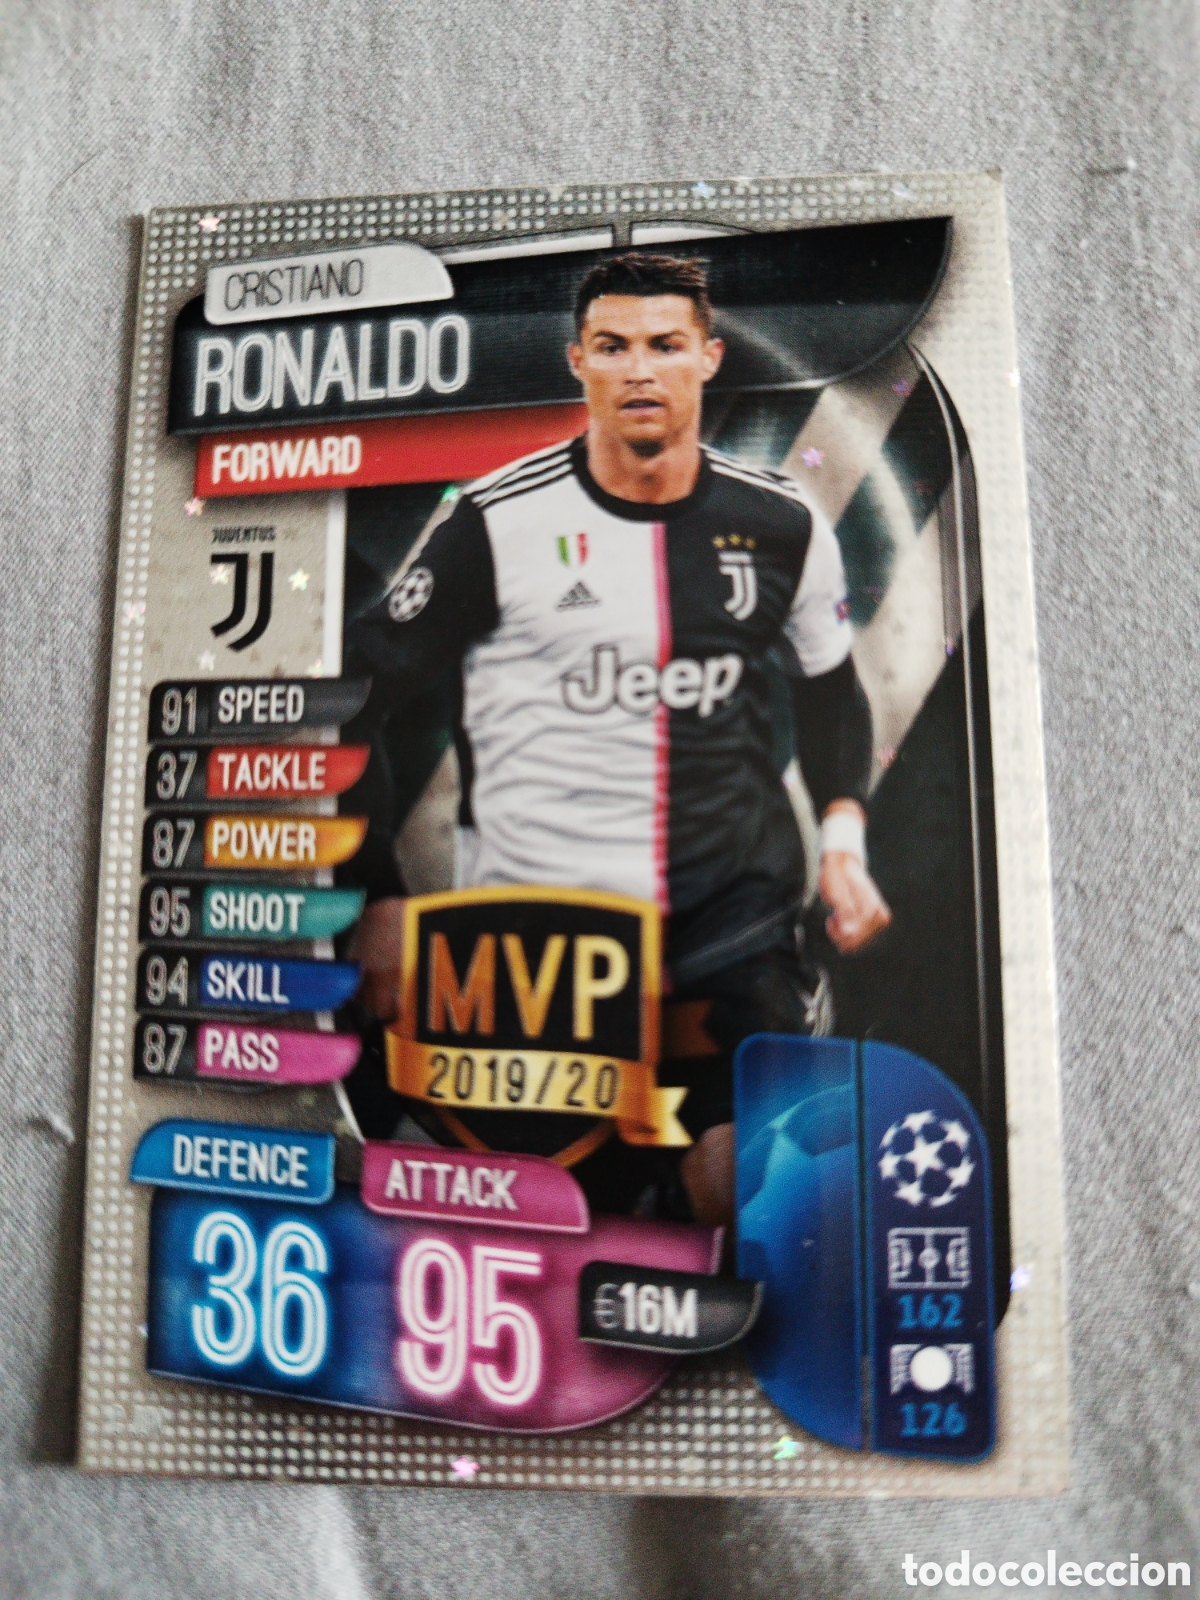 cristiano ronaldo mvp - Buy Collectible football stickers on todocoleccion